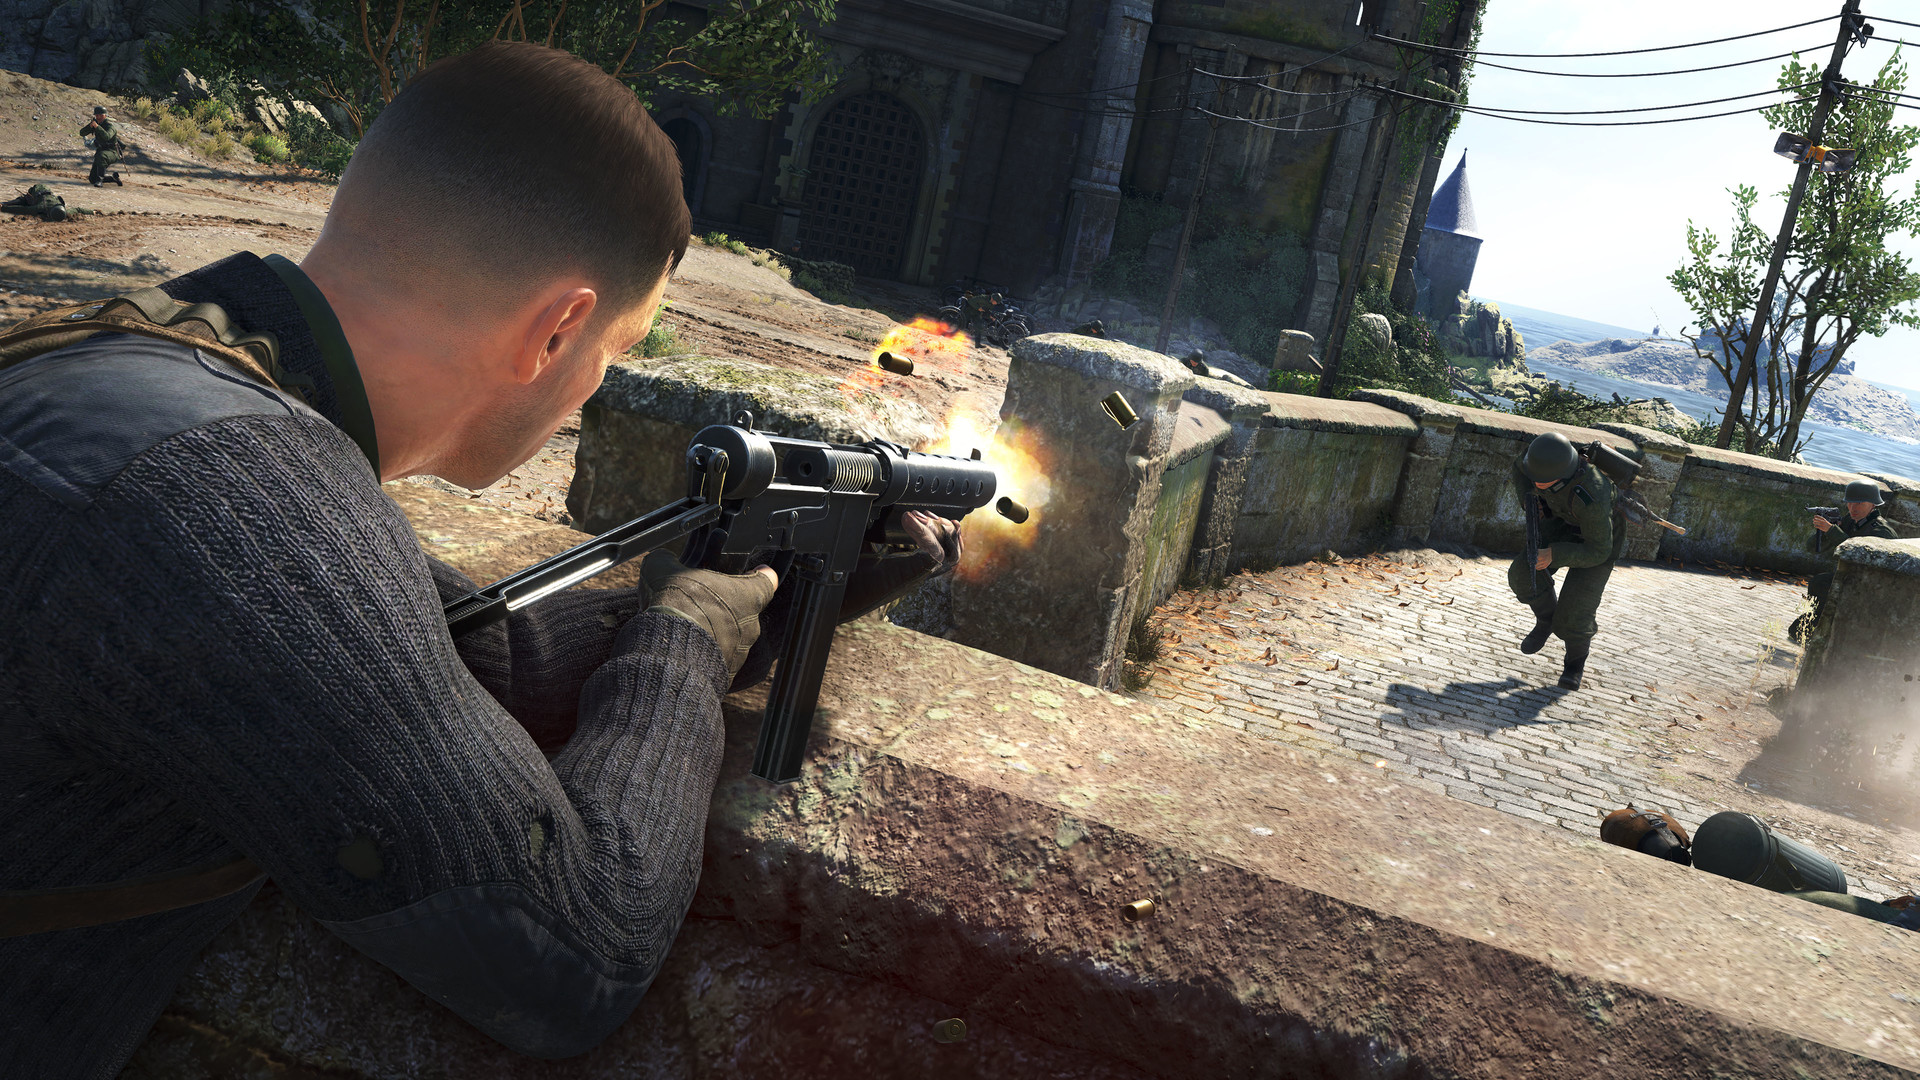 Sniper Elite 5 Steam Account